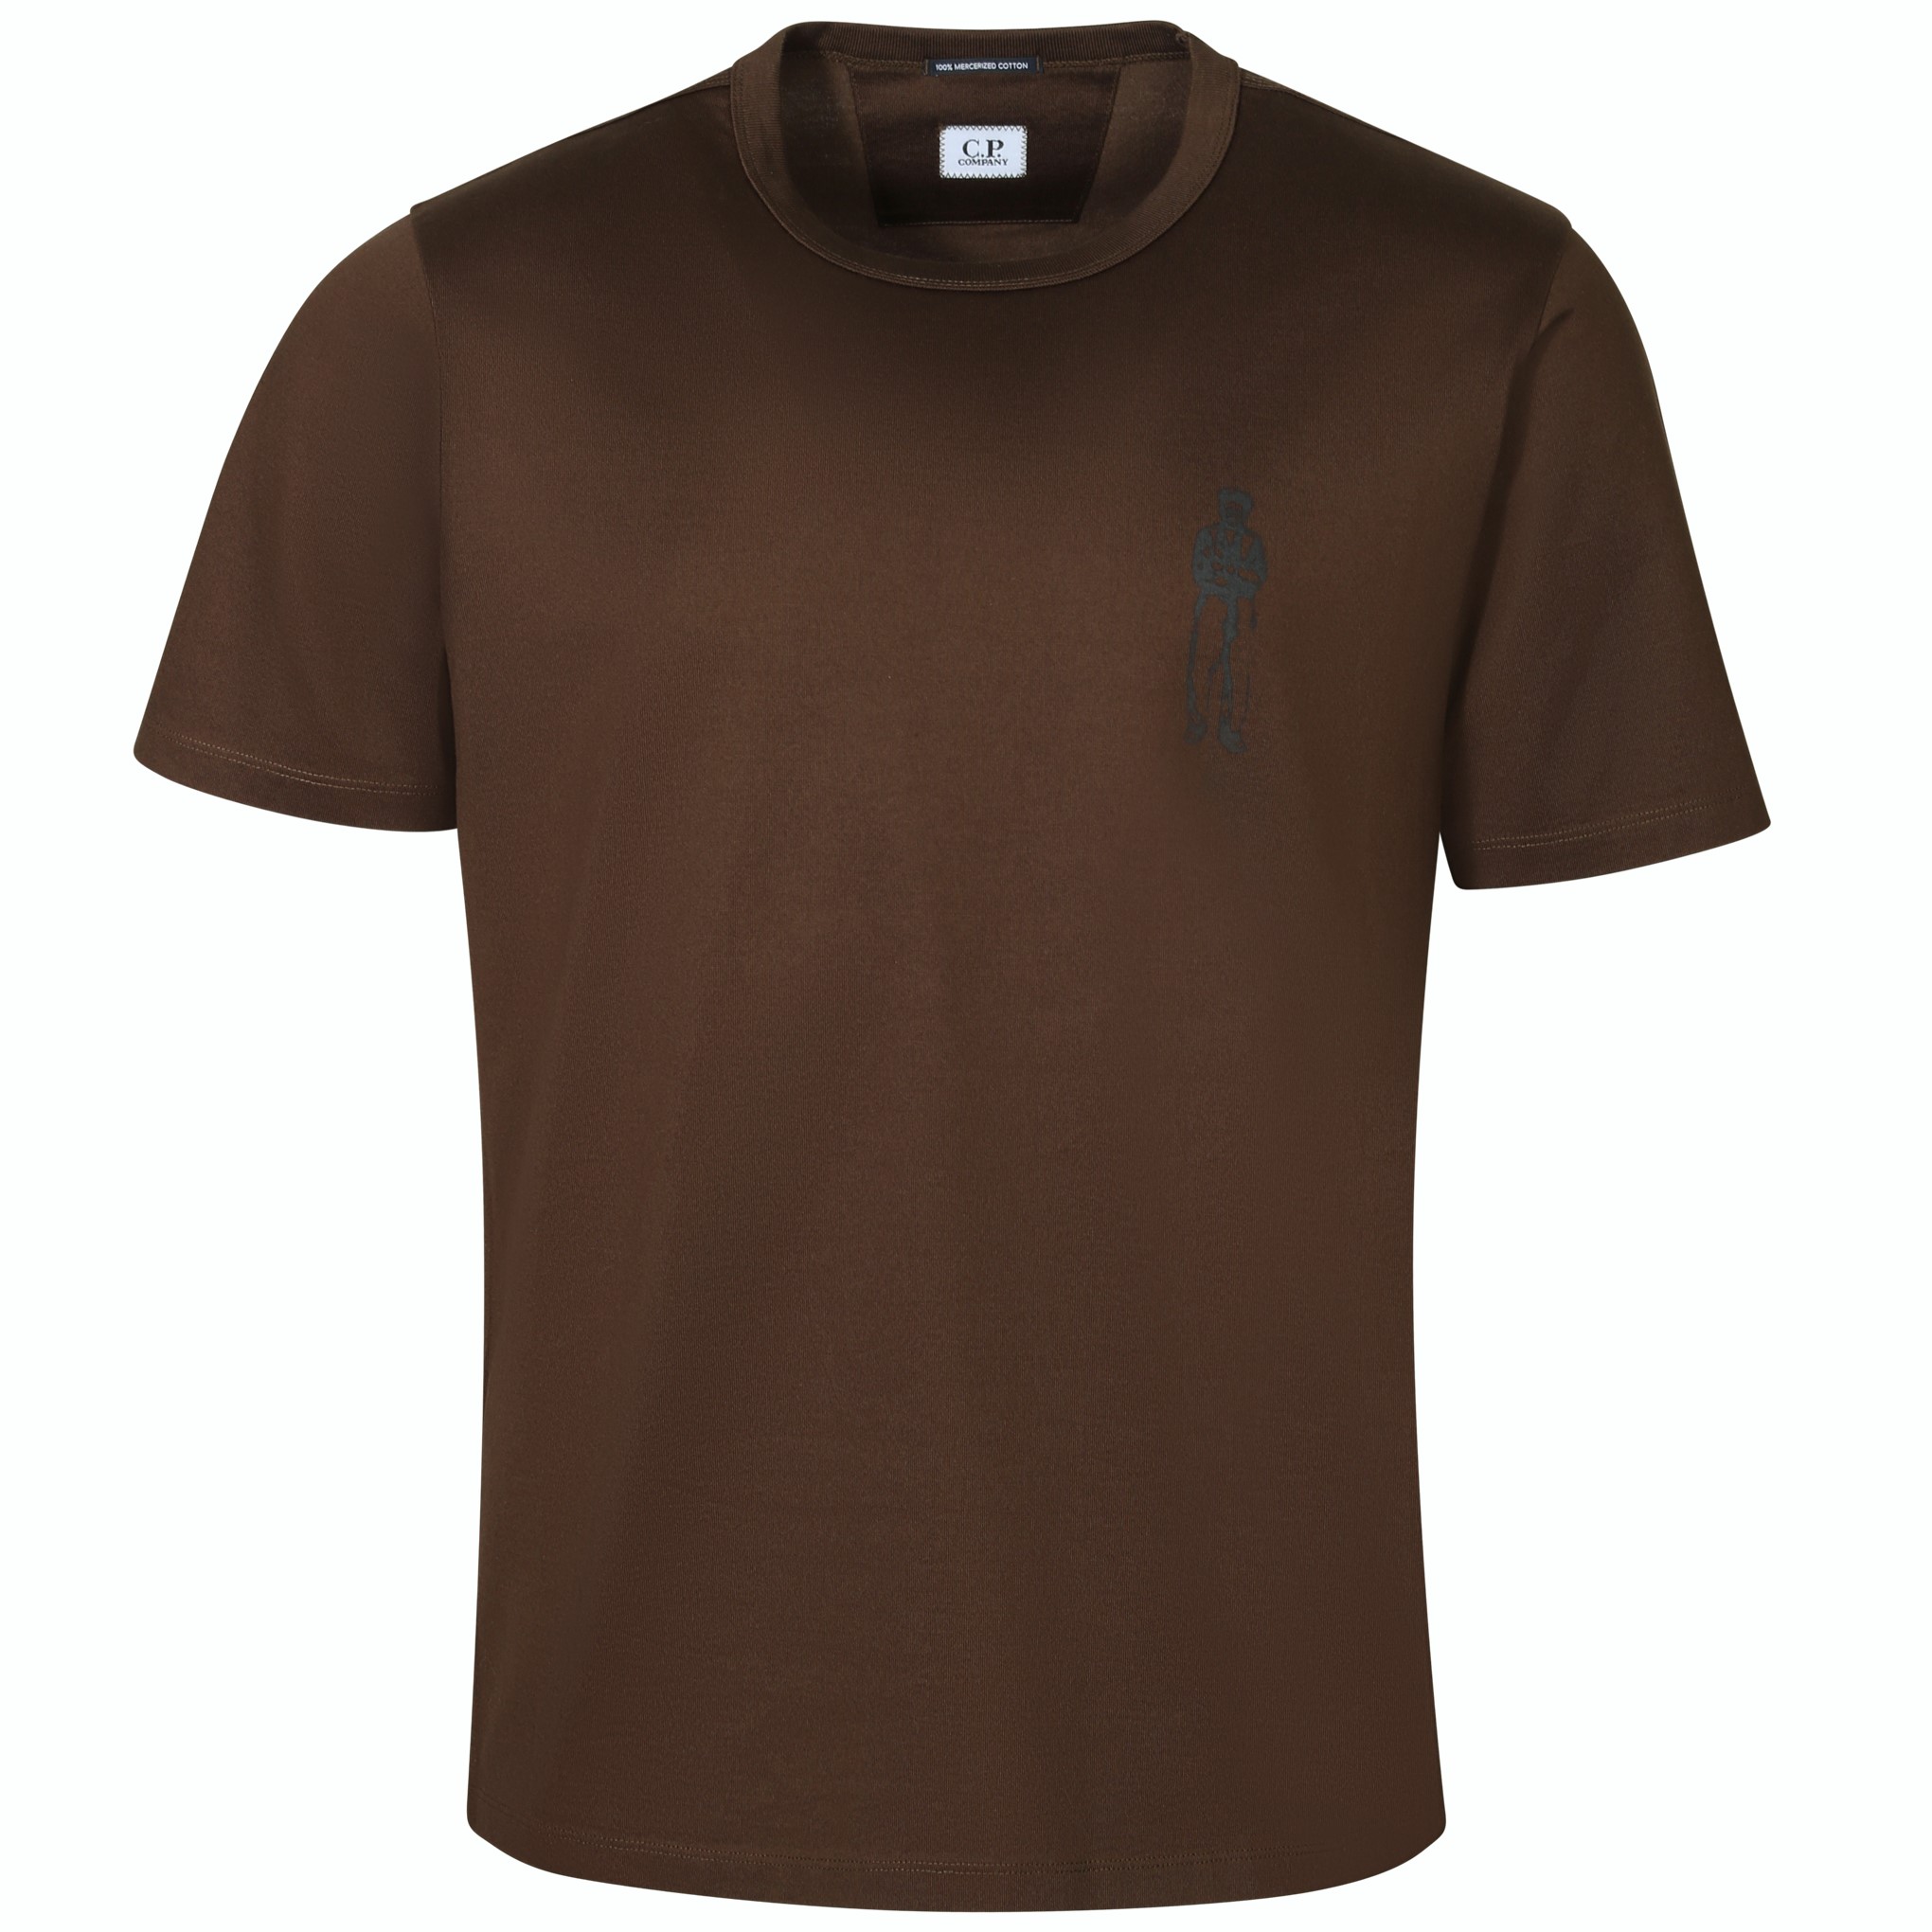 C.P. COMPANY T-Shirt in Dark Olive XXXL